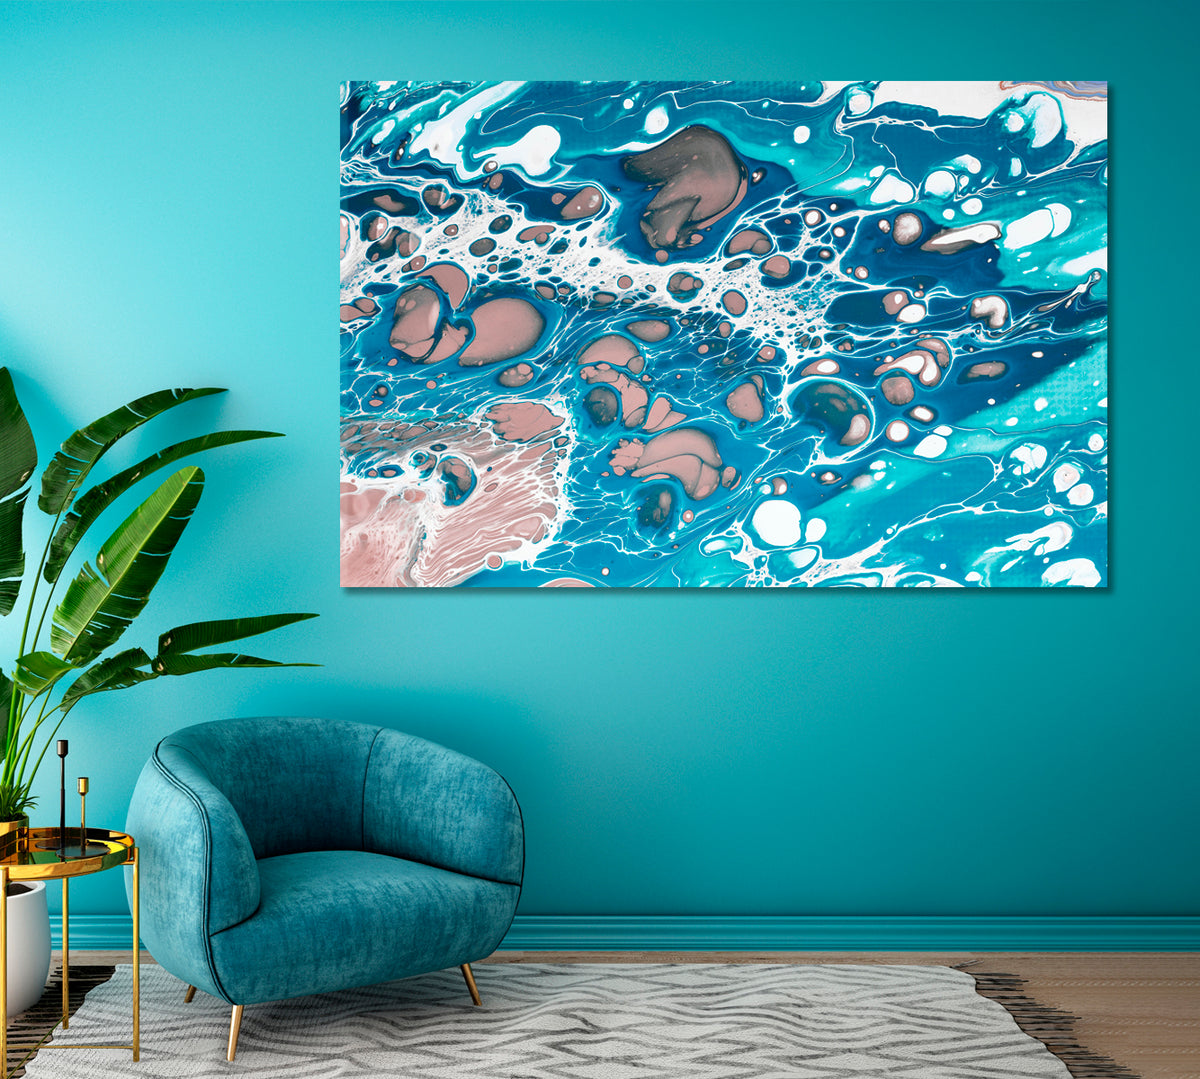 Mixed Liquid Blue Paints Fluid Art Canvas Print ArtLexy 1 Panel 24"x16" inches 